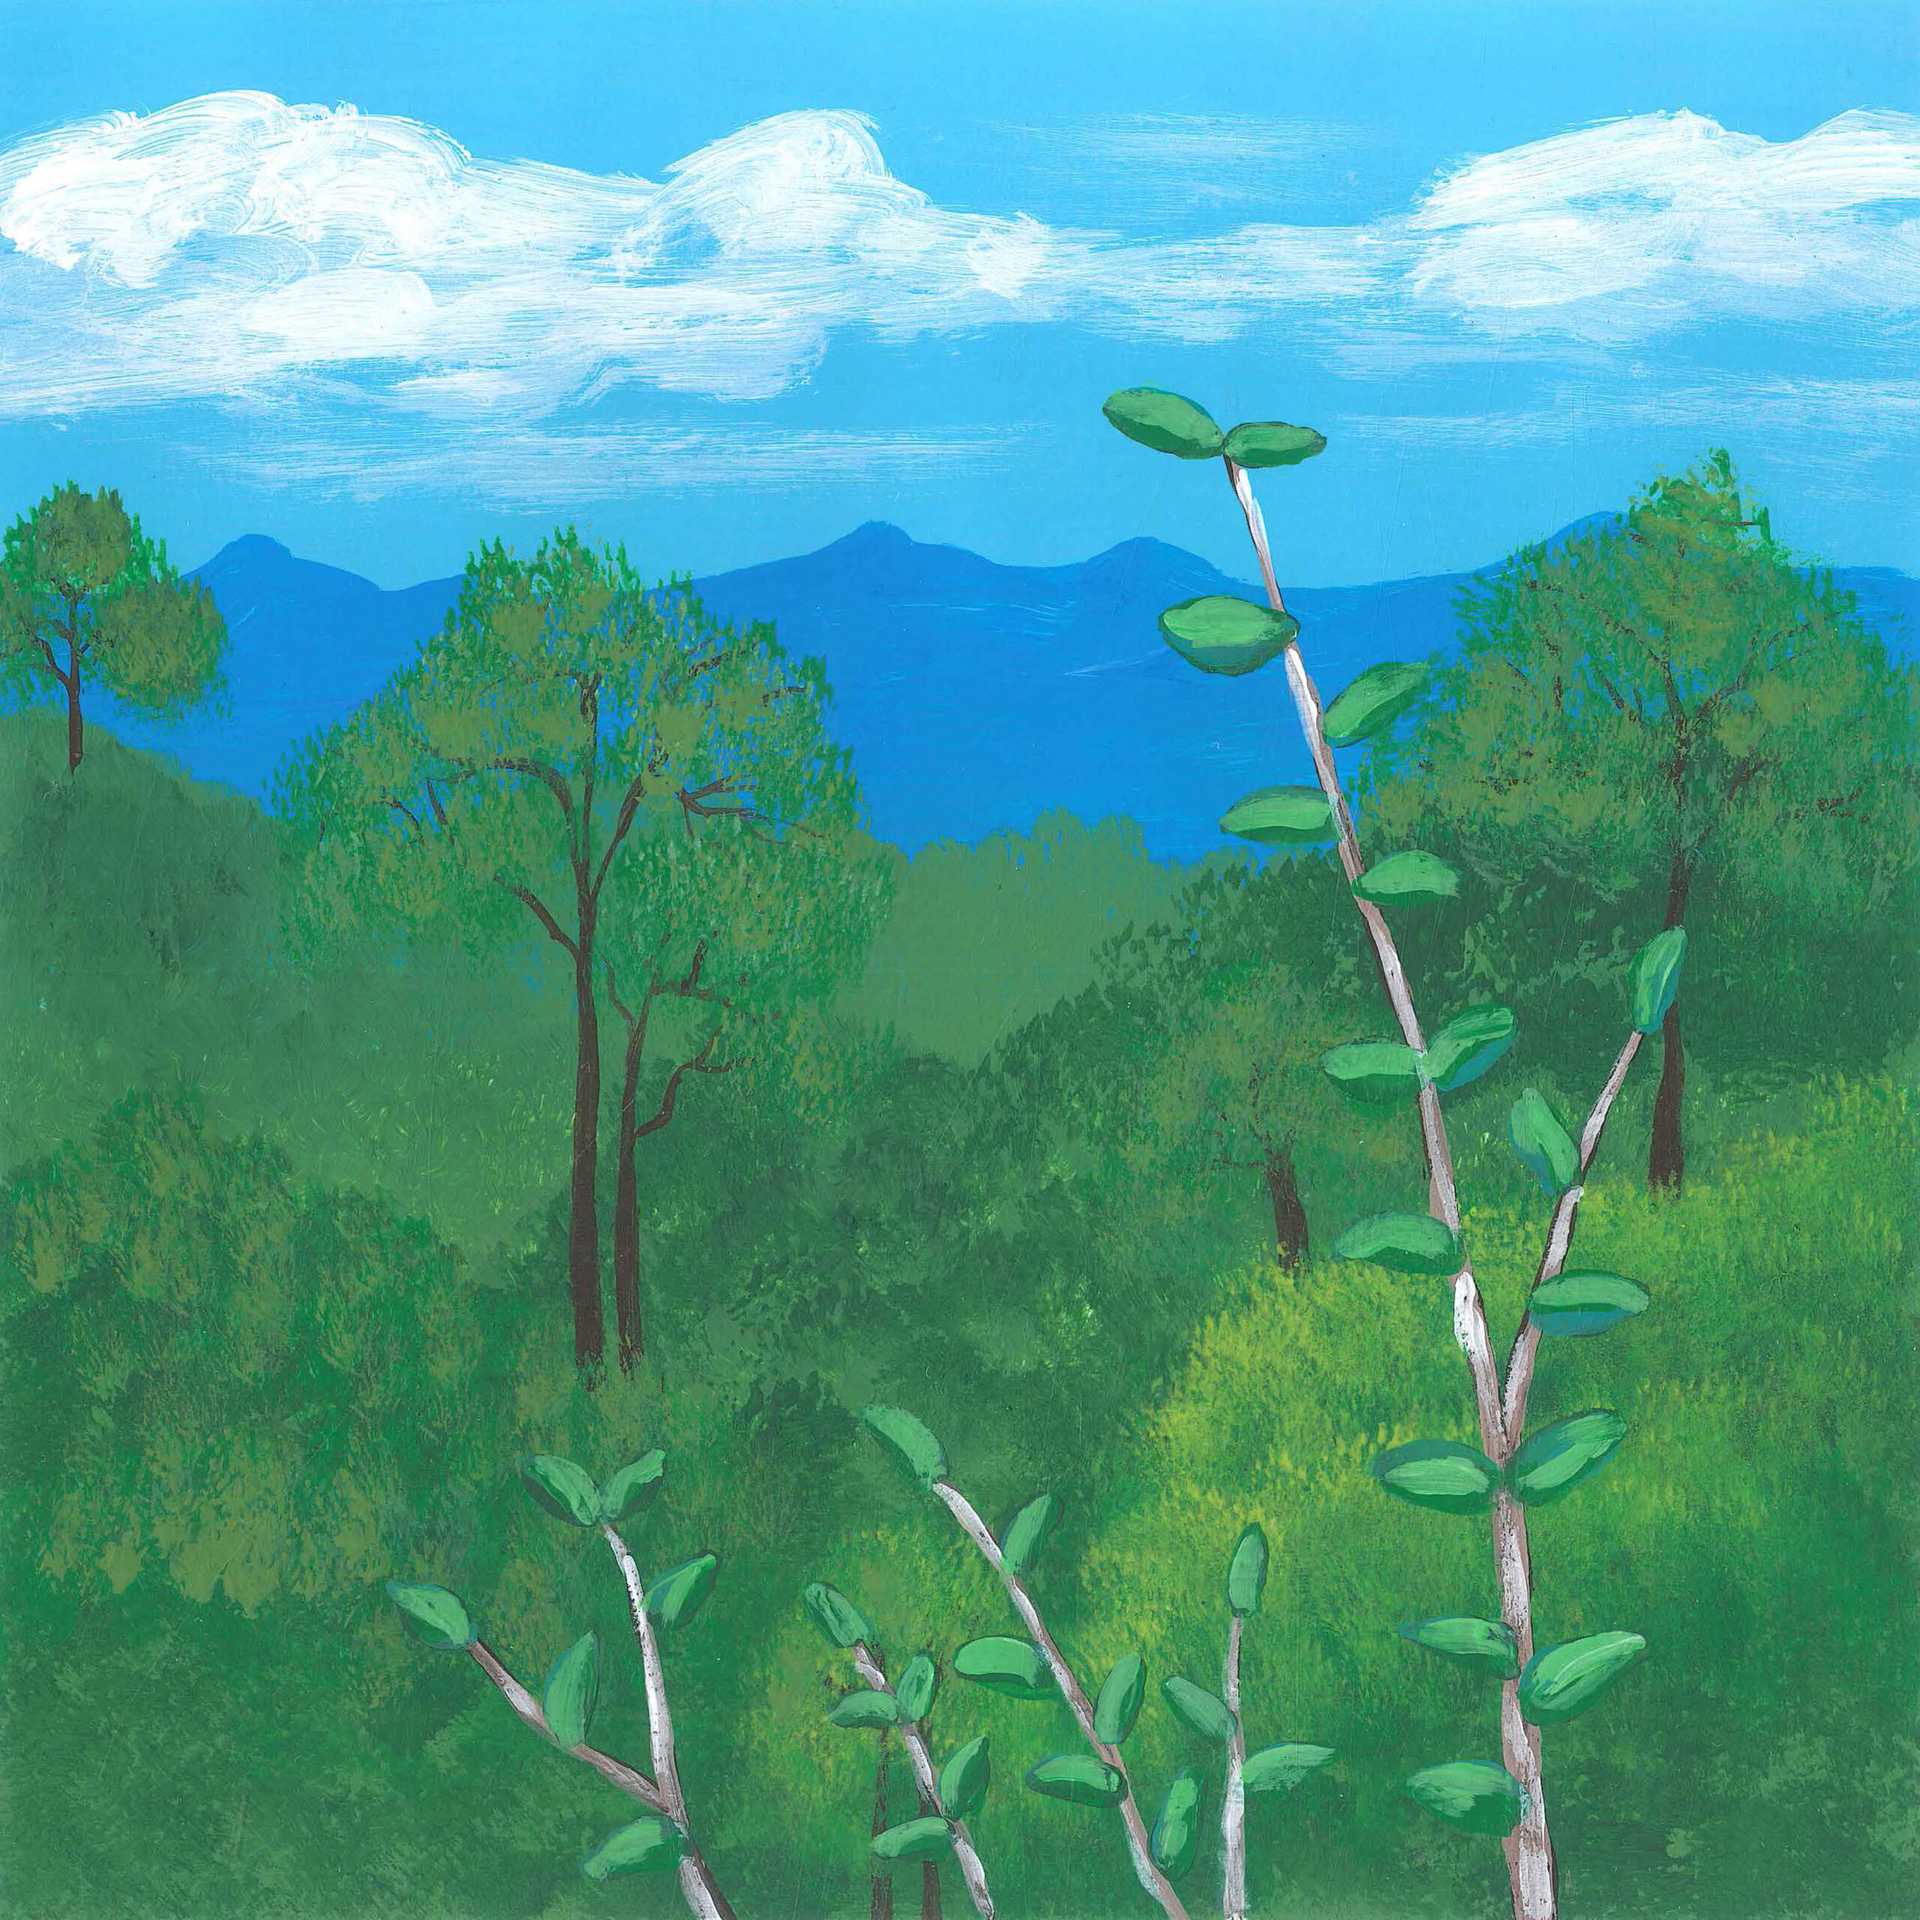 Lesser Himalaya Jungle - nature landscape painting - earth.fm